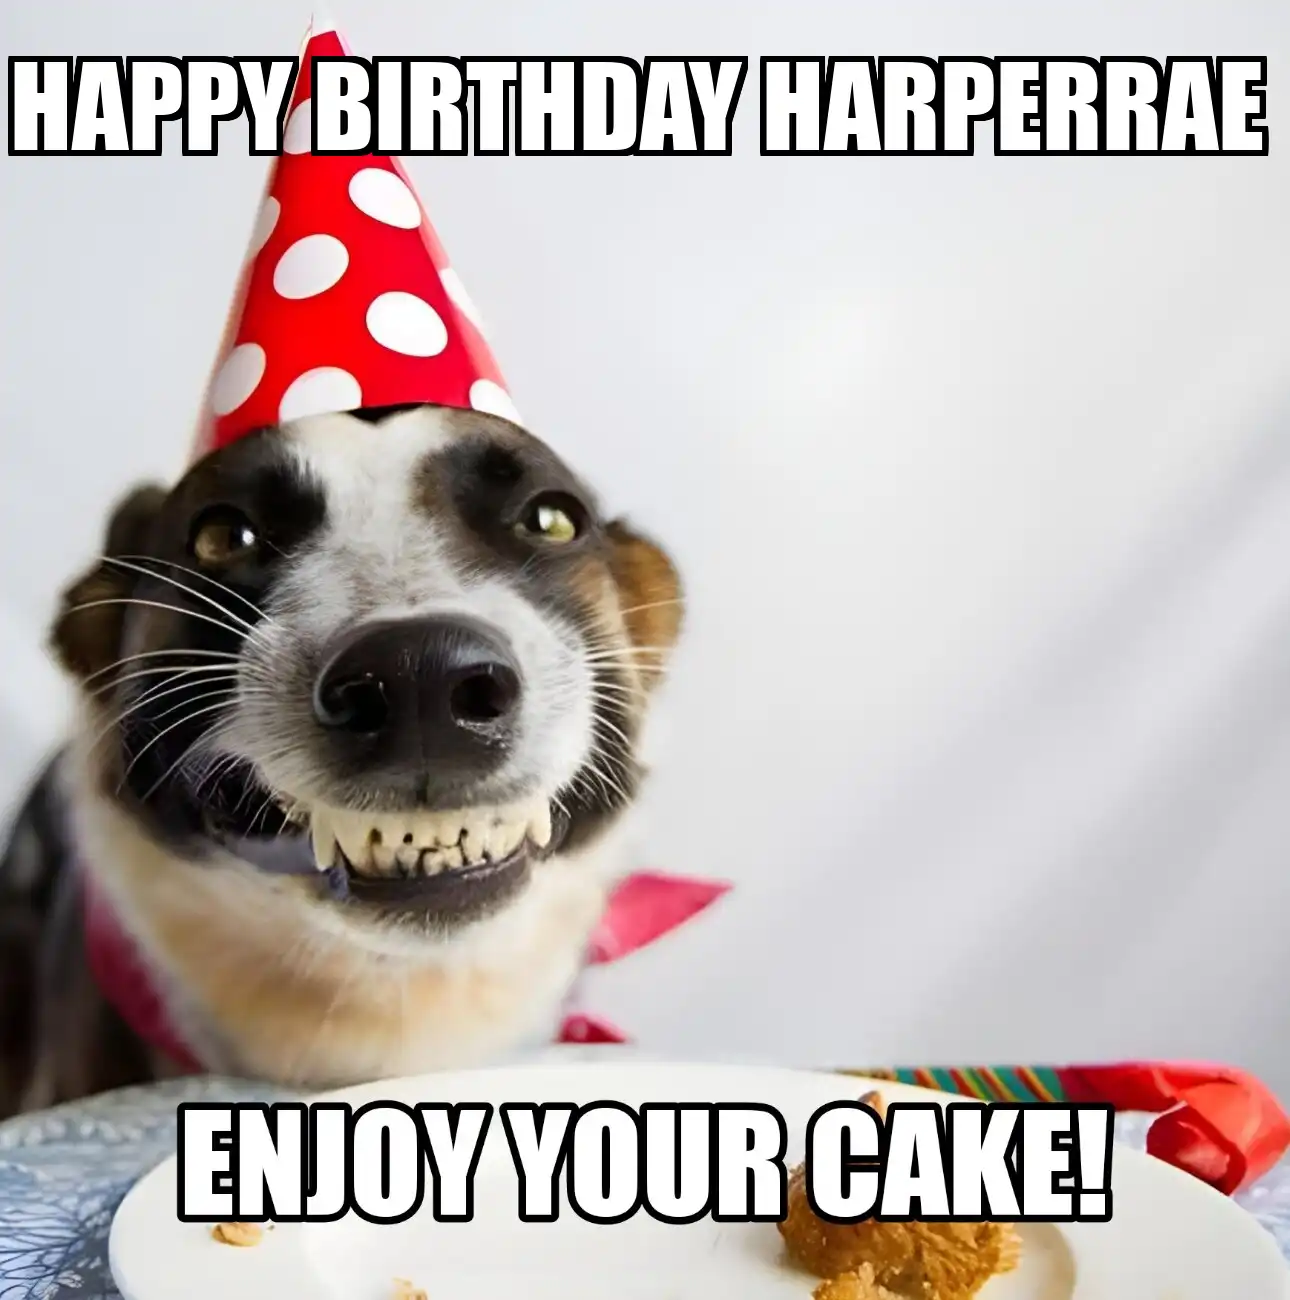 Happy Birthday Harperrae Enjoy Your Cake Dog Meme